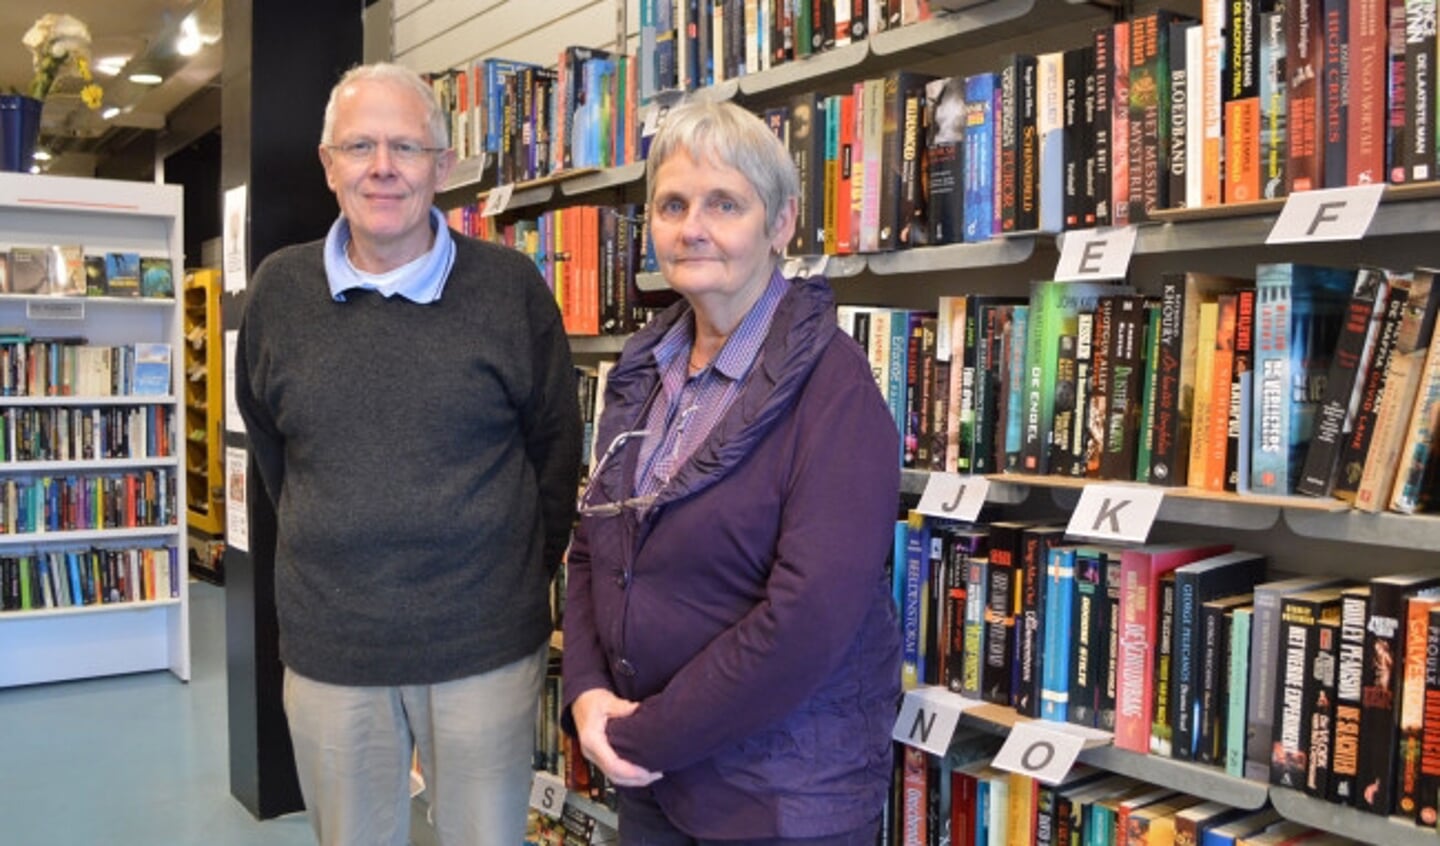  Jan Willem Seinhorst en Anneke Kleefstra in de boekenwinkel.